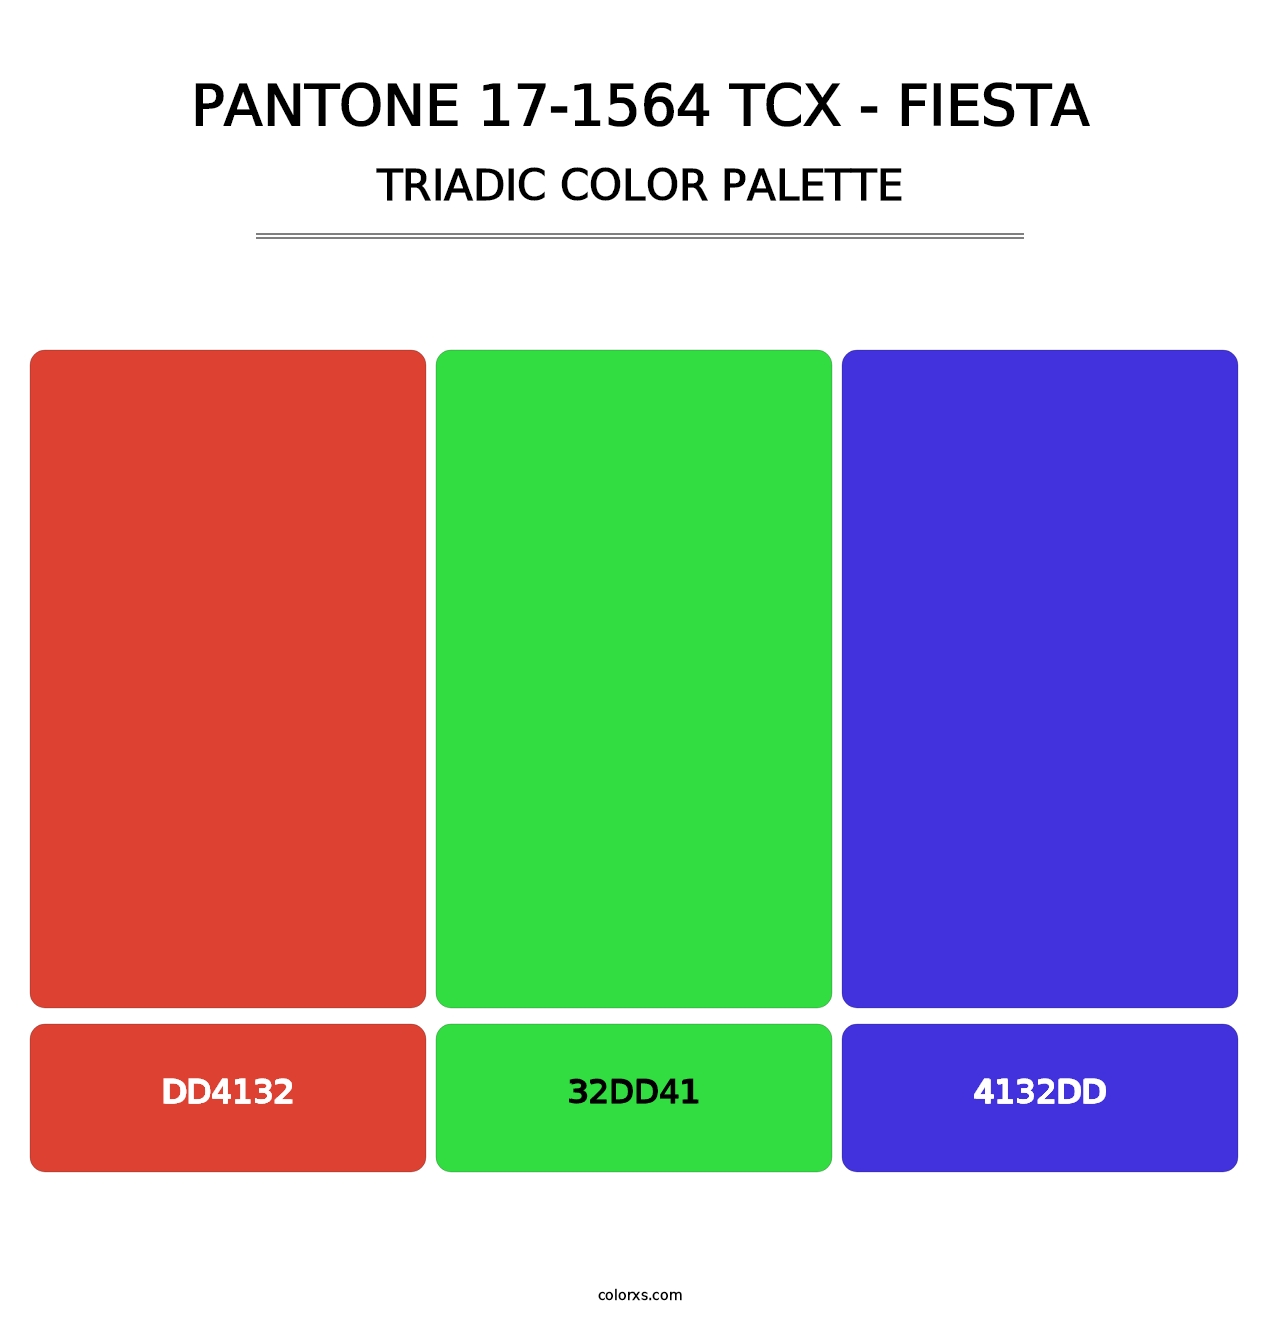 PANTONE 17-1564 TCX - Fiesta - Triadic Color Palette